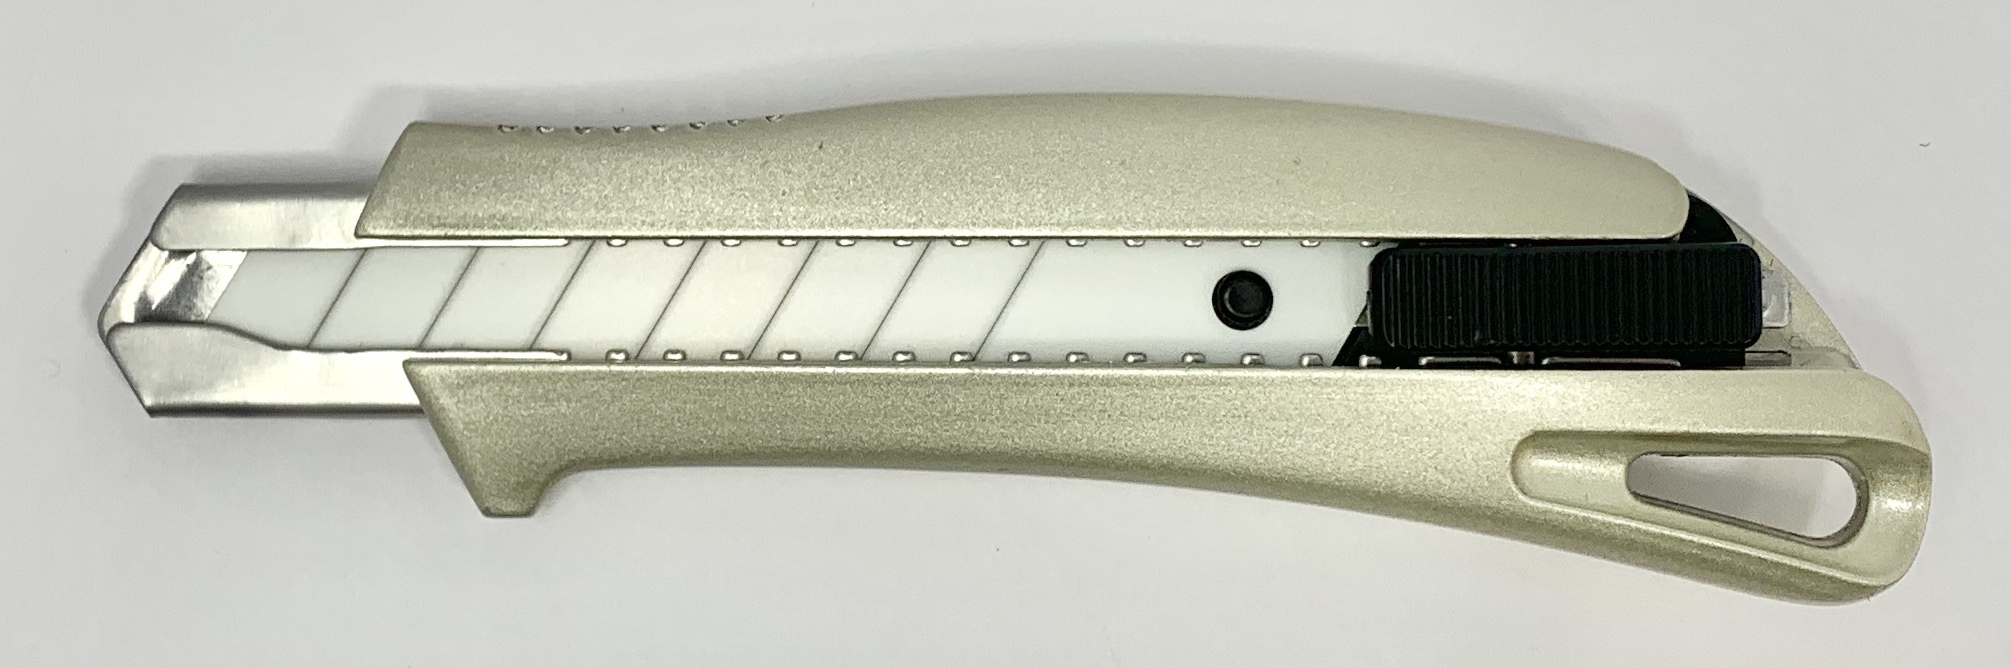 Cutter metal lame ceramique 18mm MEDID - 888